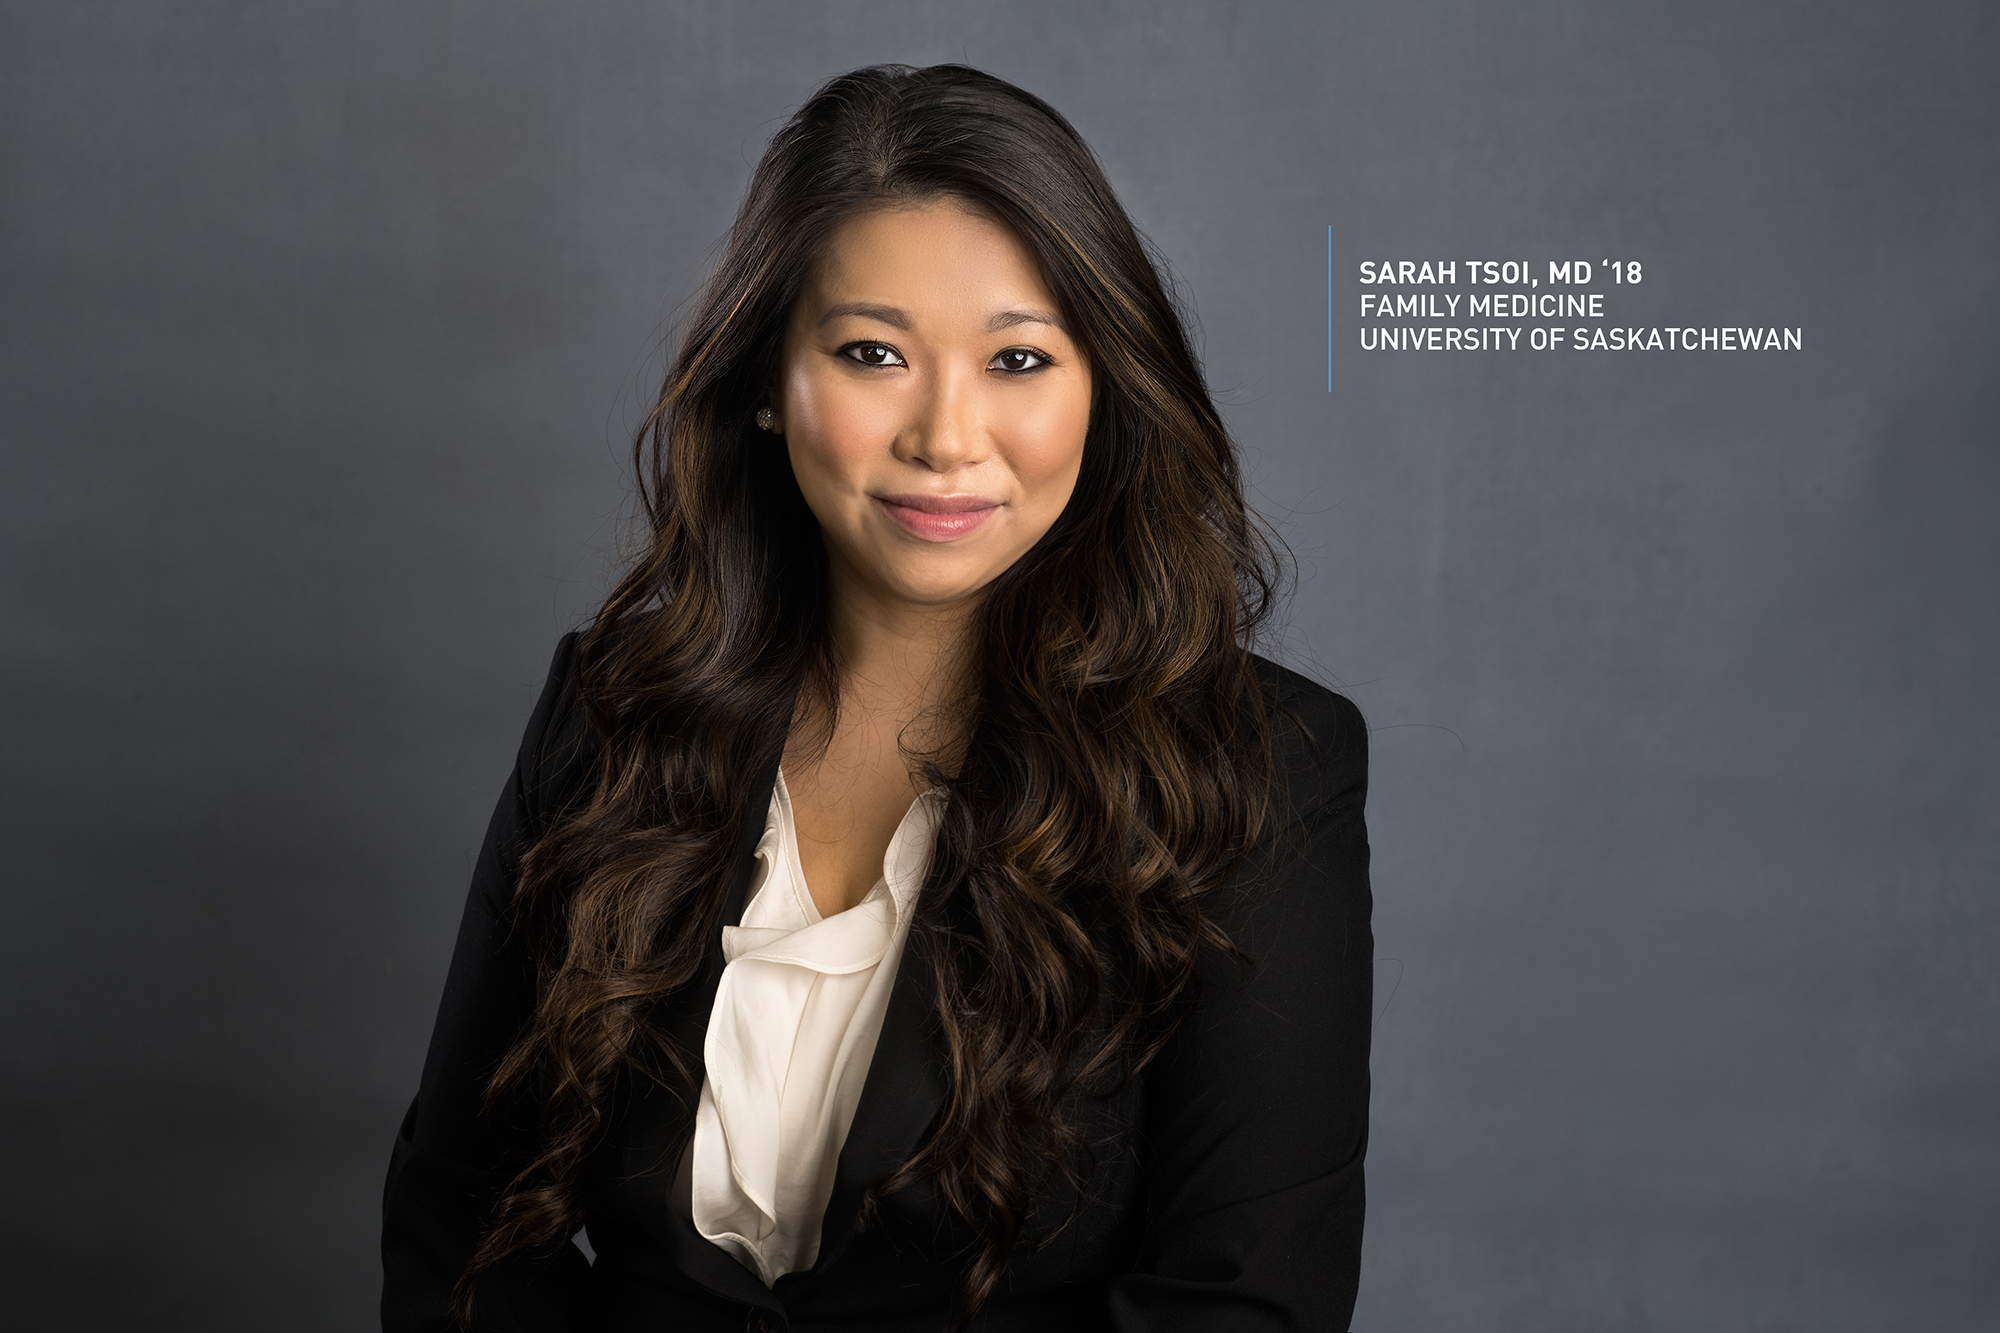 Sarah Tsoi, MD '18, Family Medicine, University of Saskatchewan